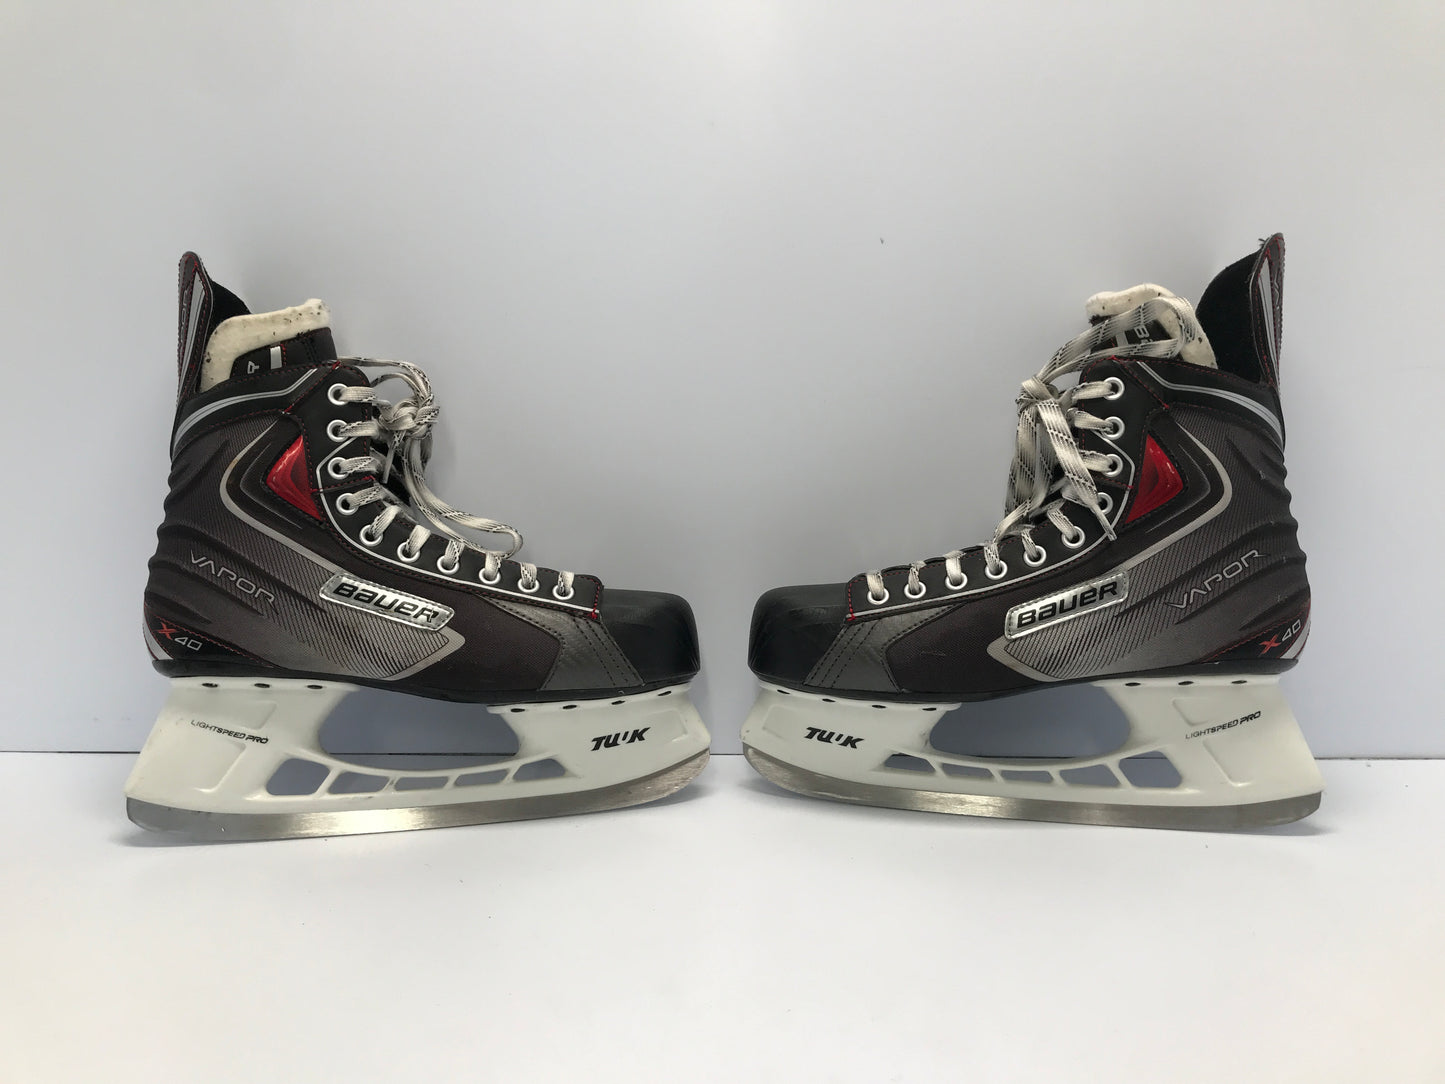 Hockey Skates Men's Size 11.5 Shoe 10 Skate Size Bauer Vapor Excellent Like New